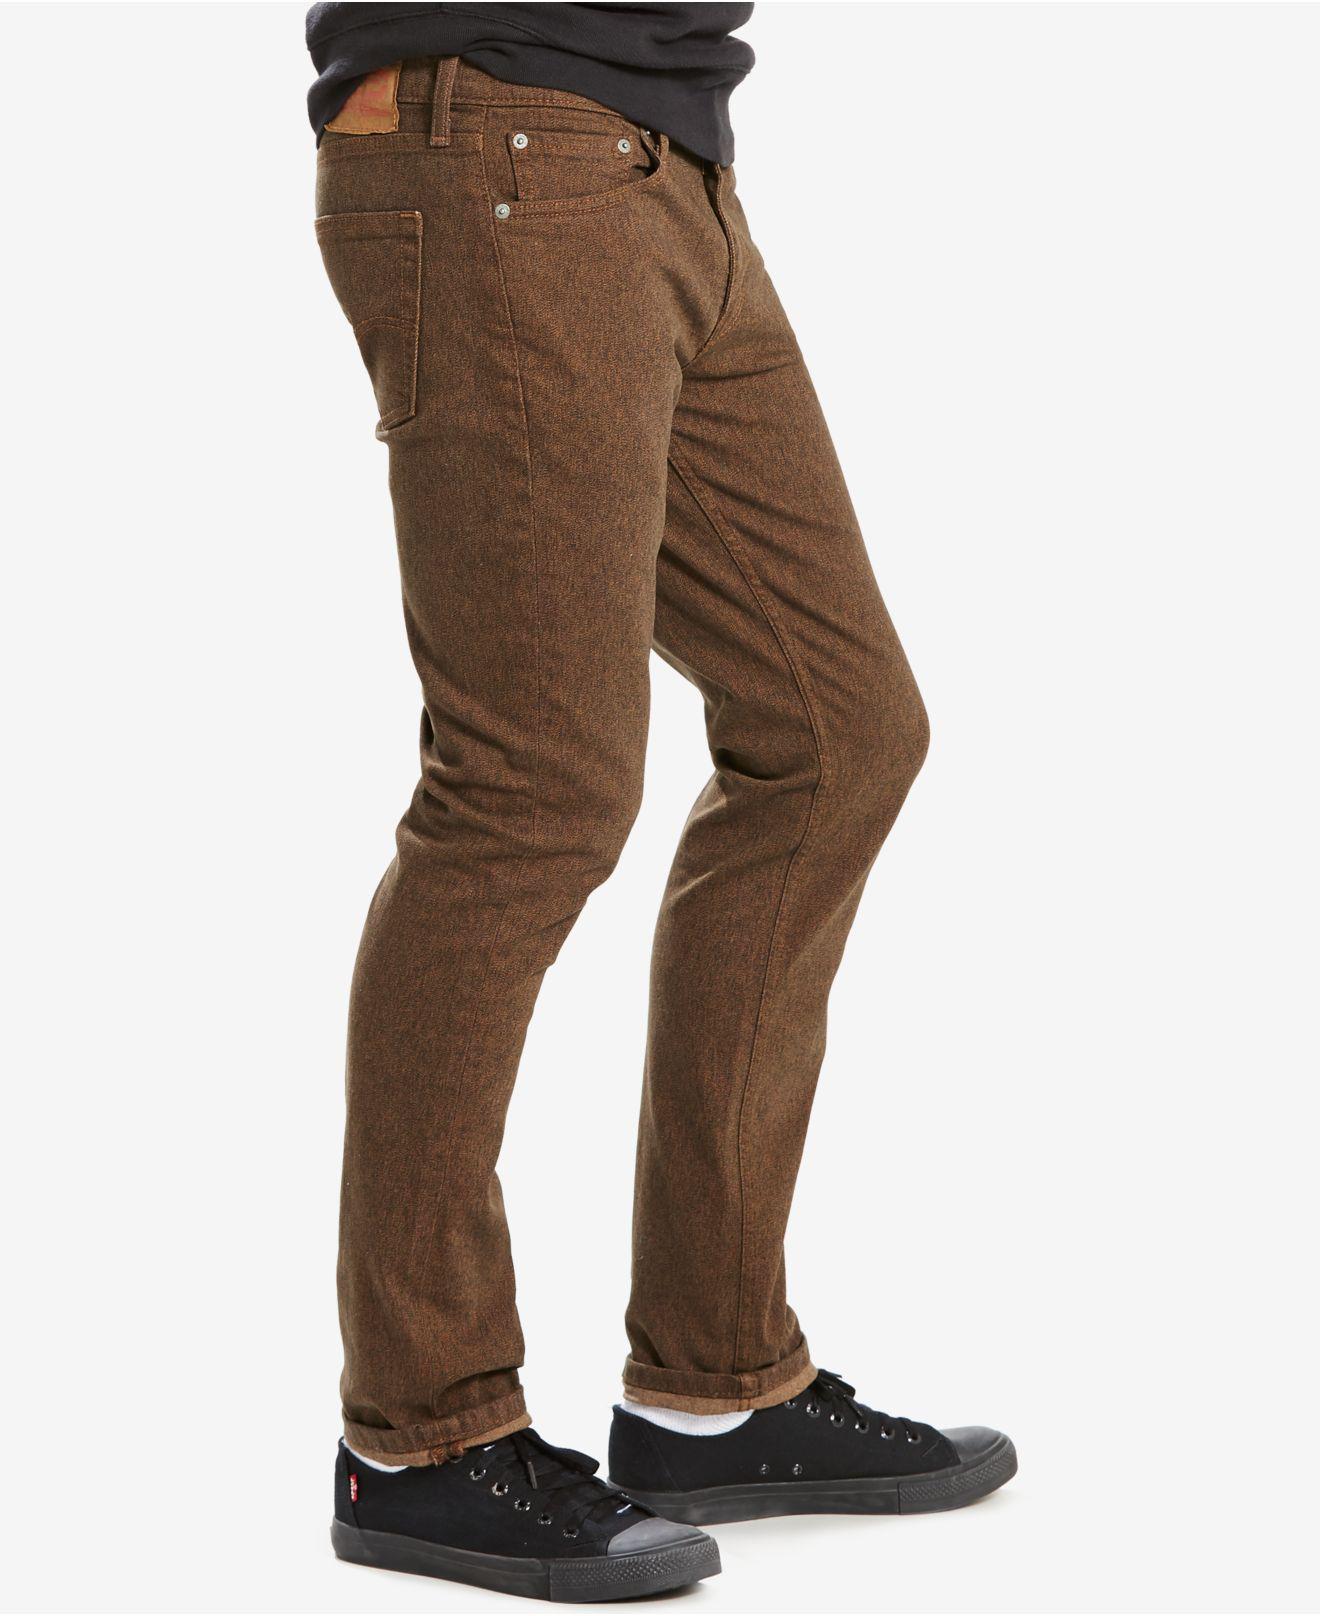 Lyst - Levi's Men's 511tm Slim-fit Stretch Jaspee Jeans in Brown for Men